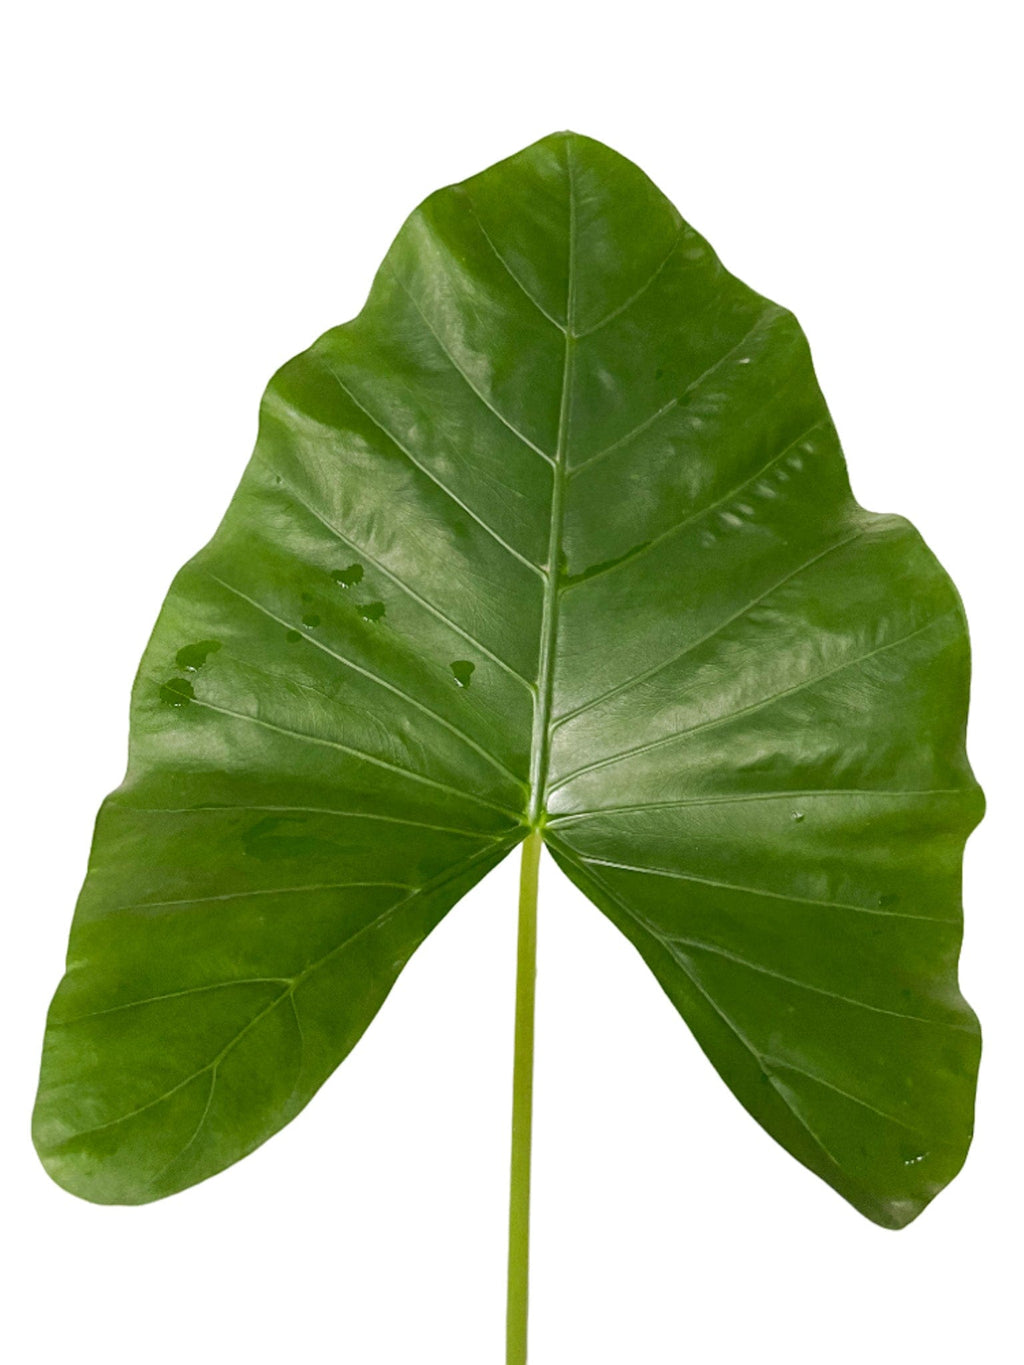 Alocasia Large Green